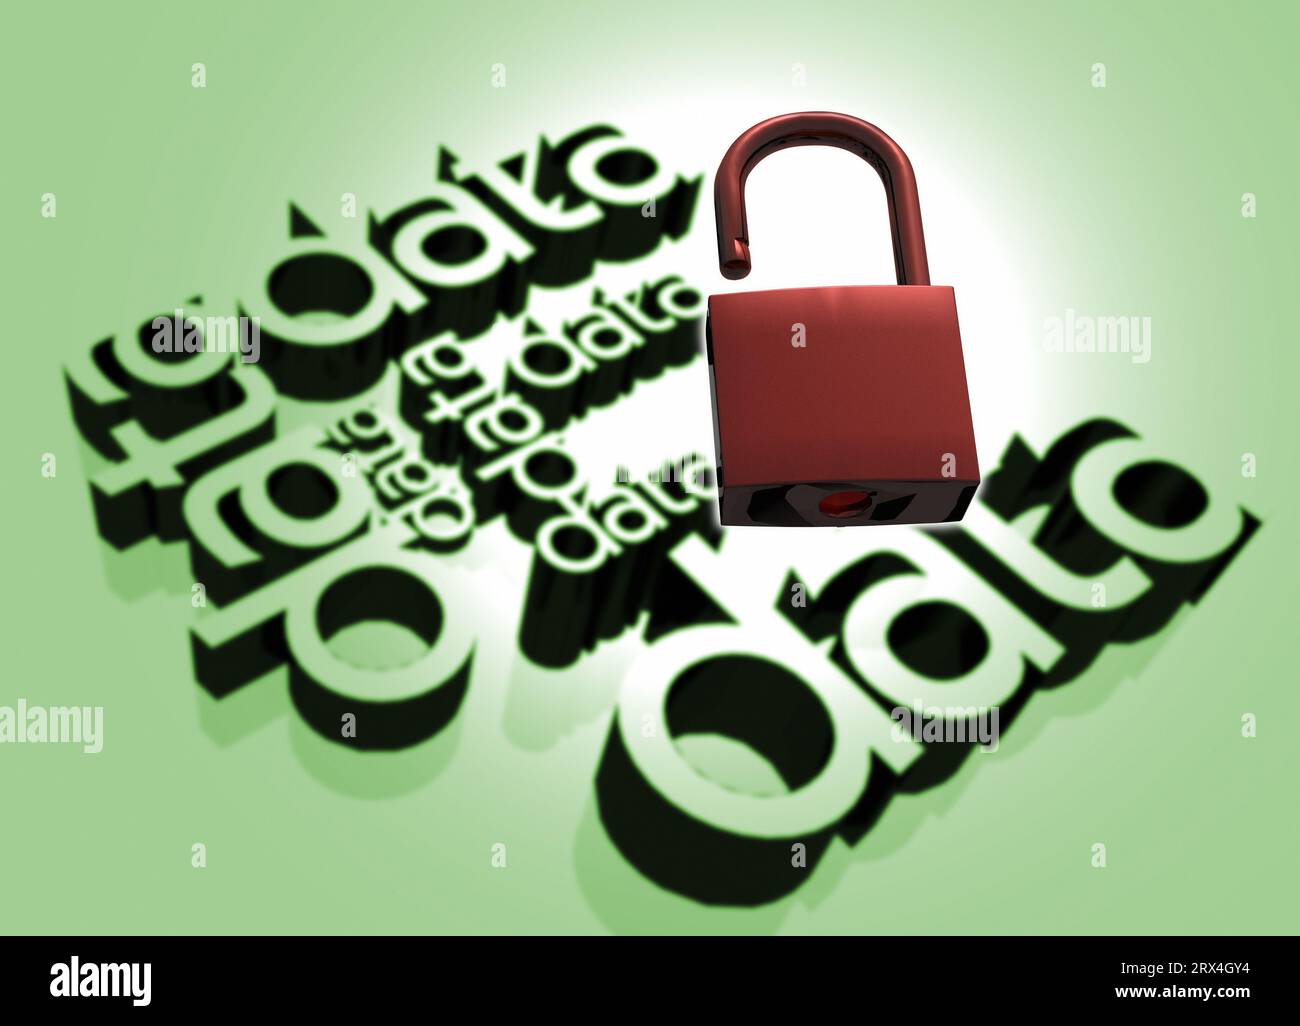 Data security, conceptual illustration Stock Photo